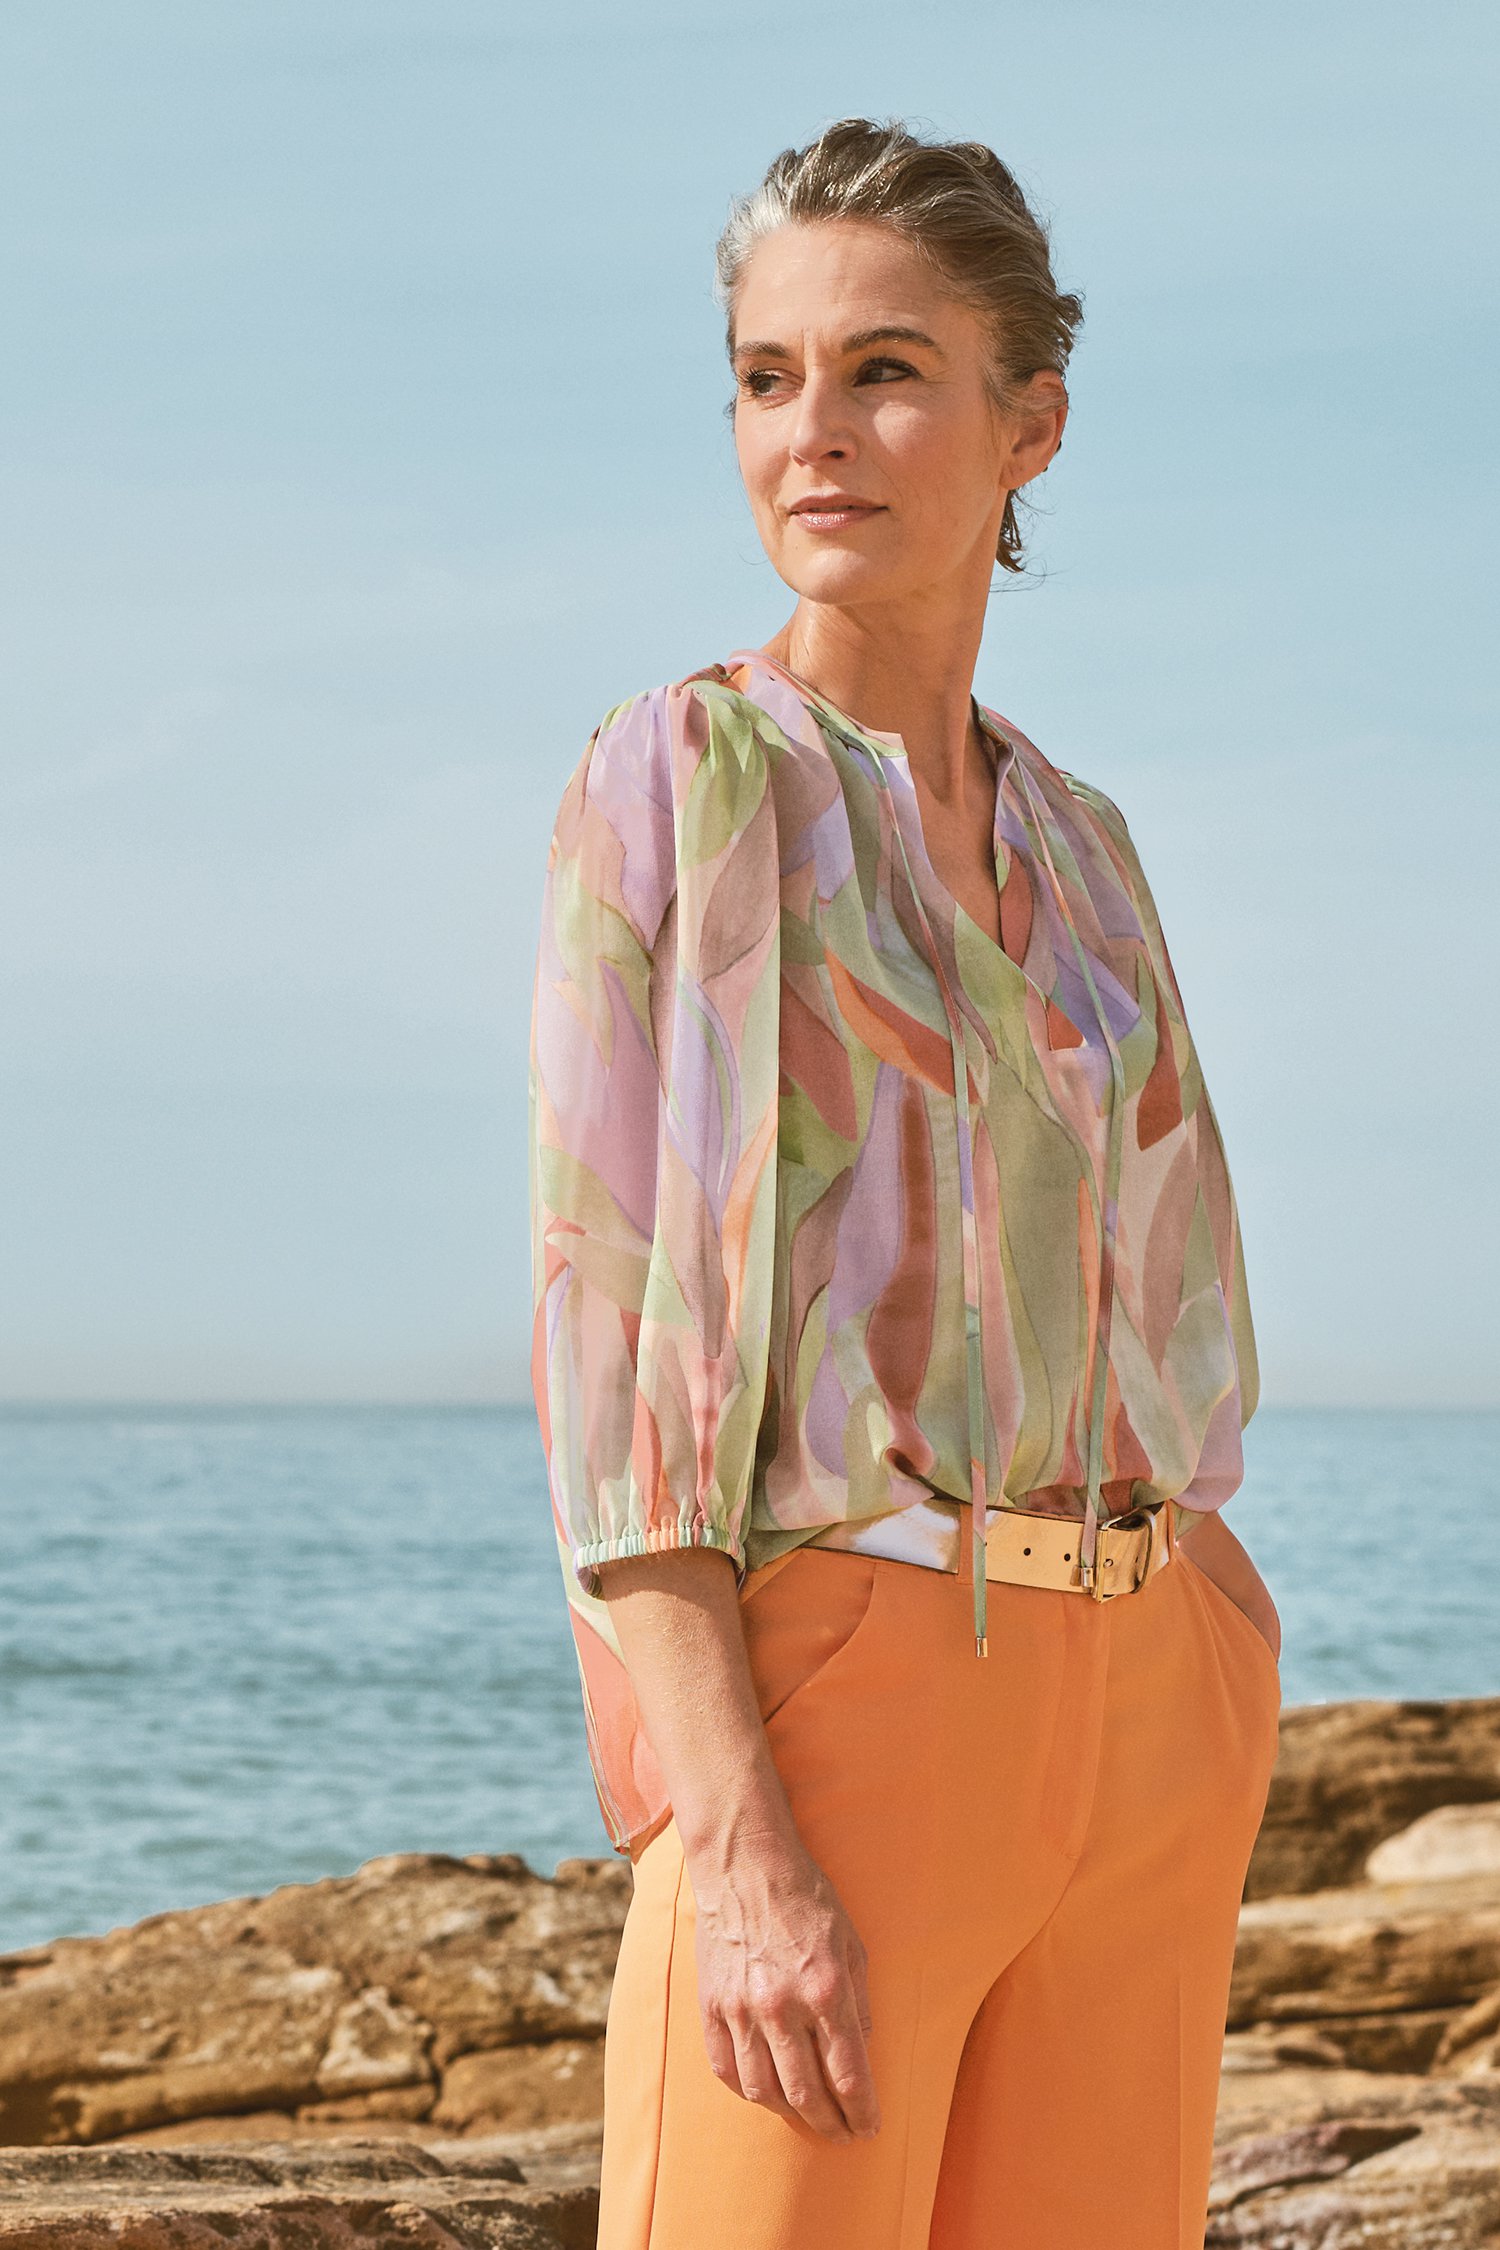 Fijne blouse met pastel print  van D'Auvry voor Dames